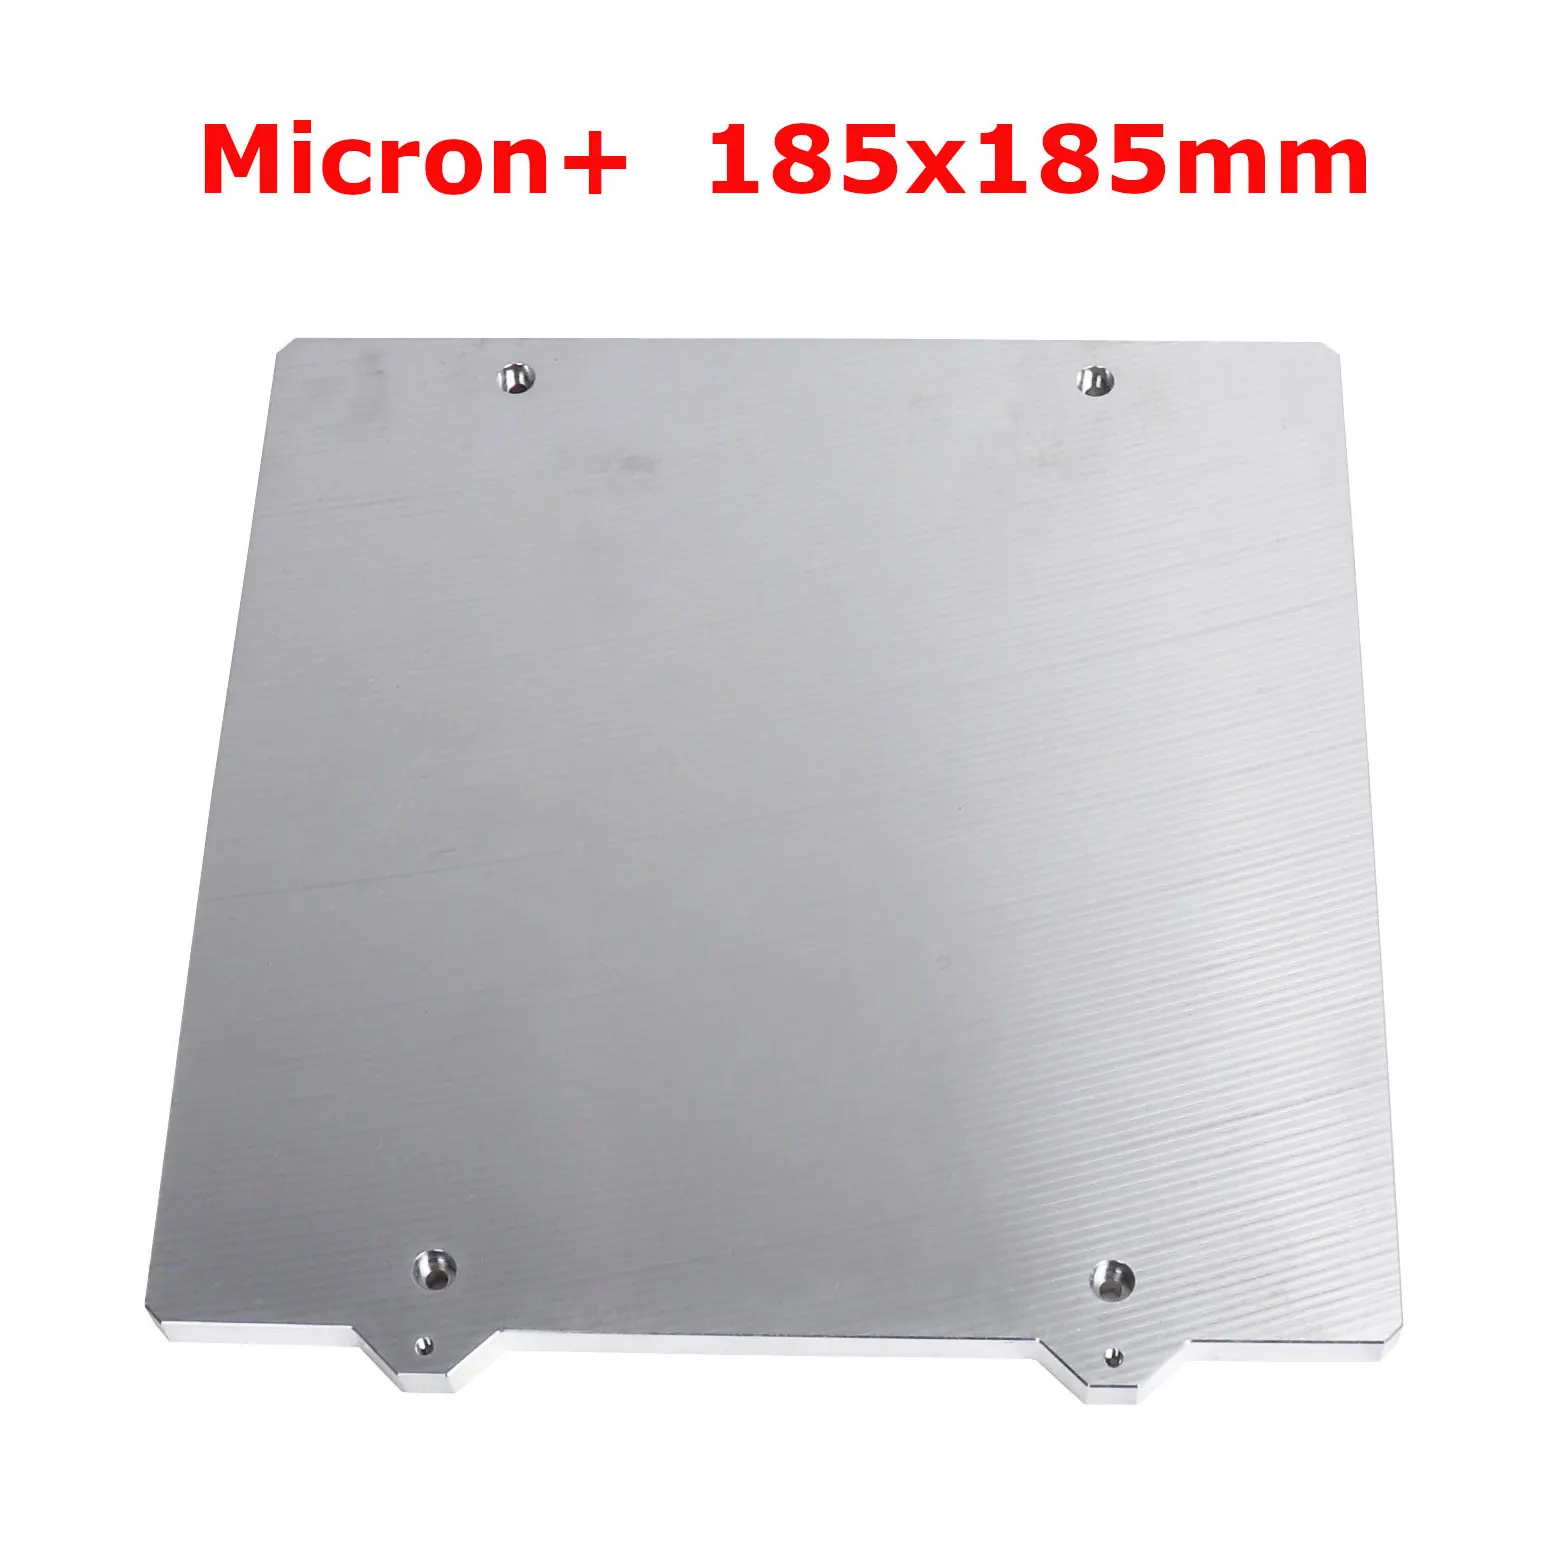 

Blurolls 185x185mm Voron Micron+ Bed Plate Aluminum Alloy Build Plate Cast Aluminum for Micron Plus 180 8mm Thick 3d Printer